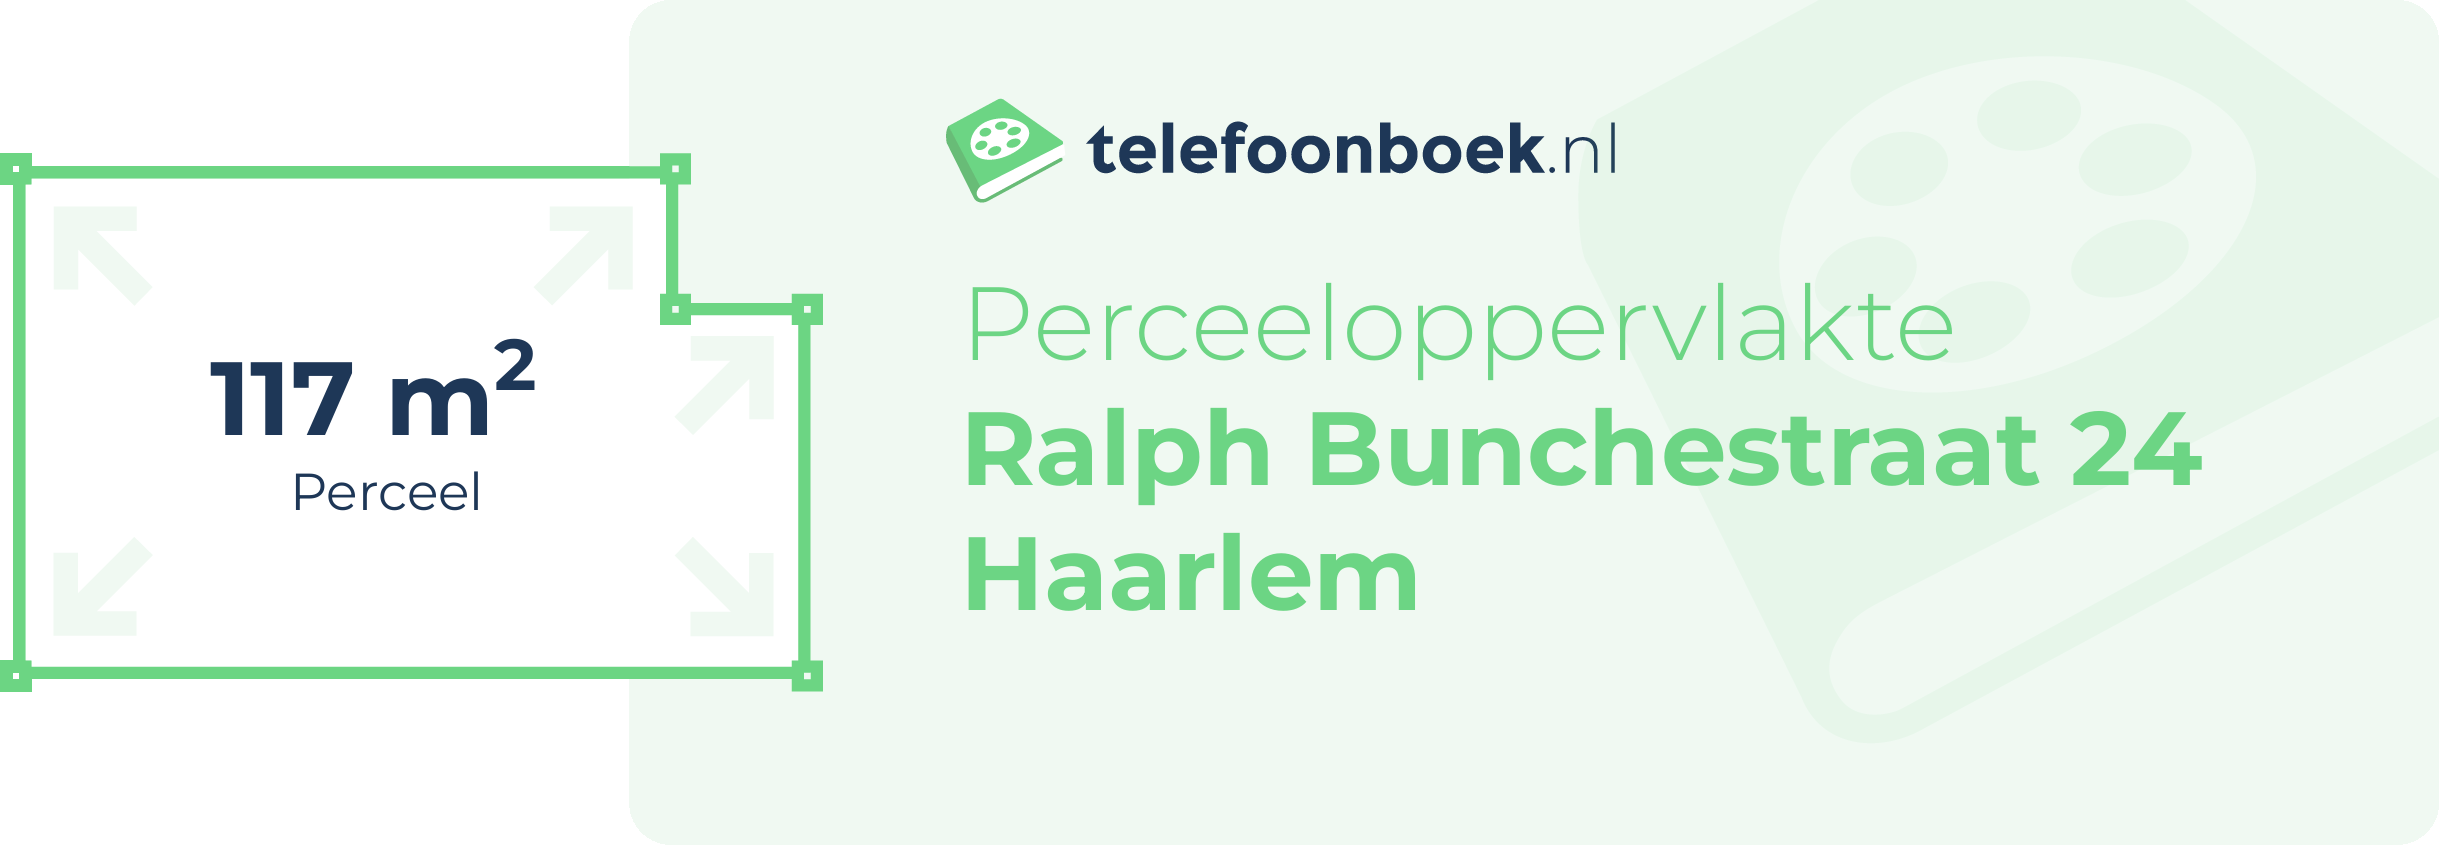 Perceeloppervlakte Ralph Bunchestraat 24 Haarlem